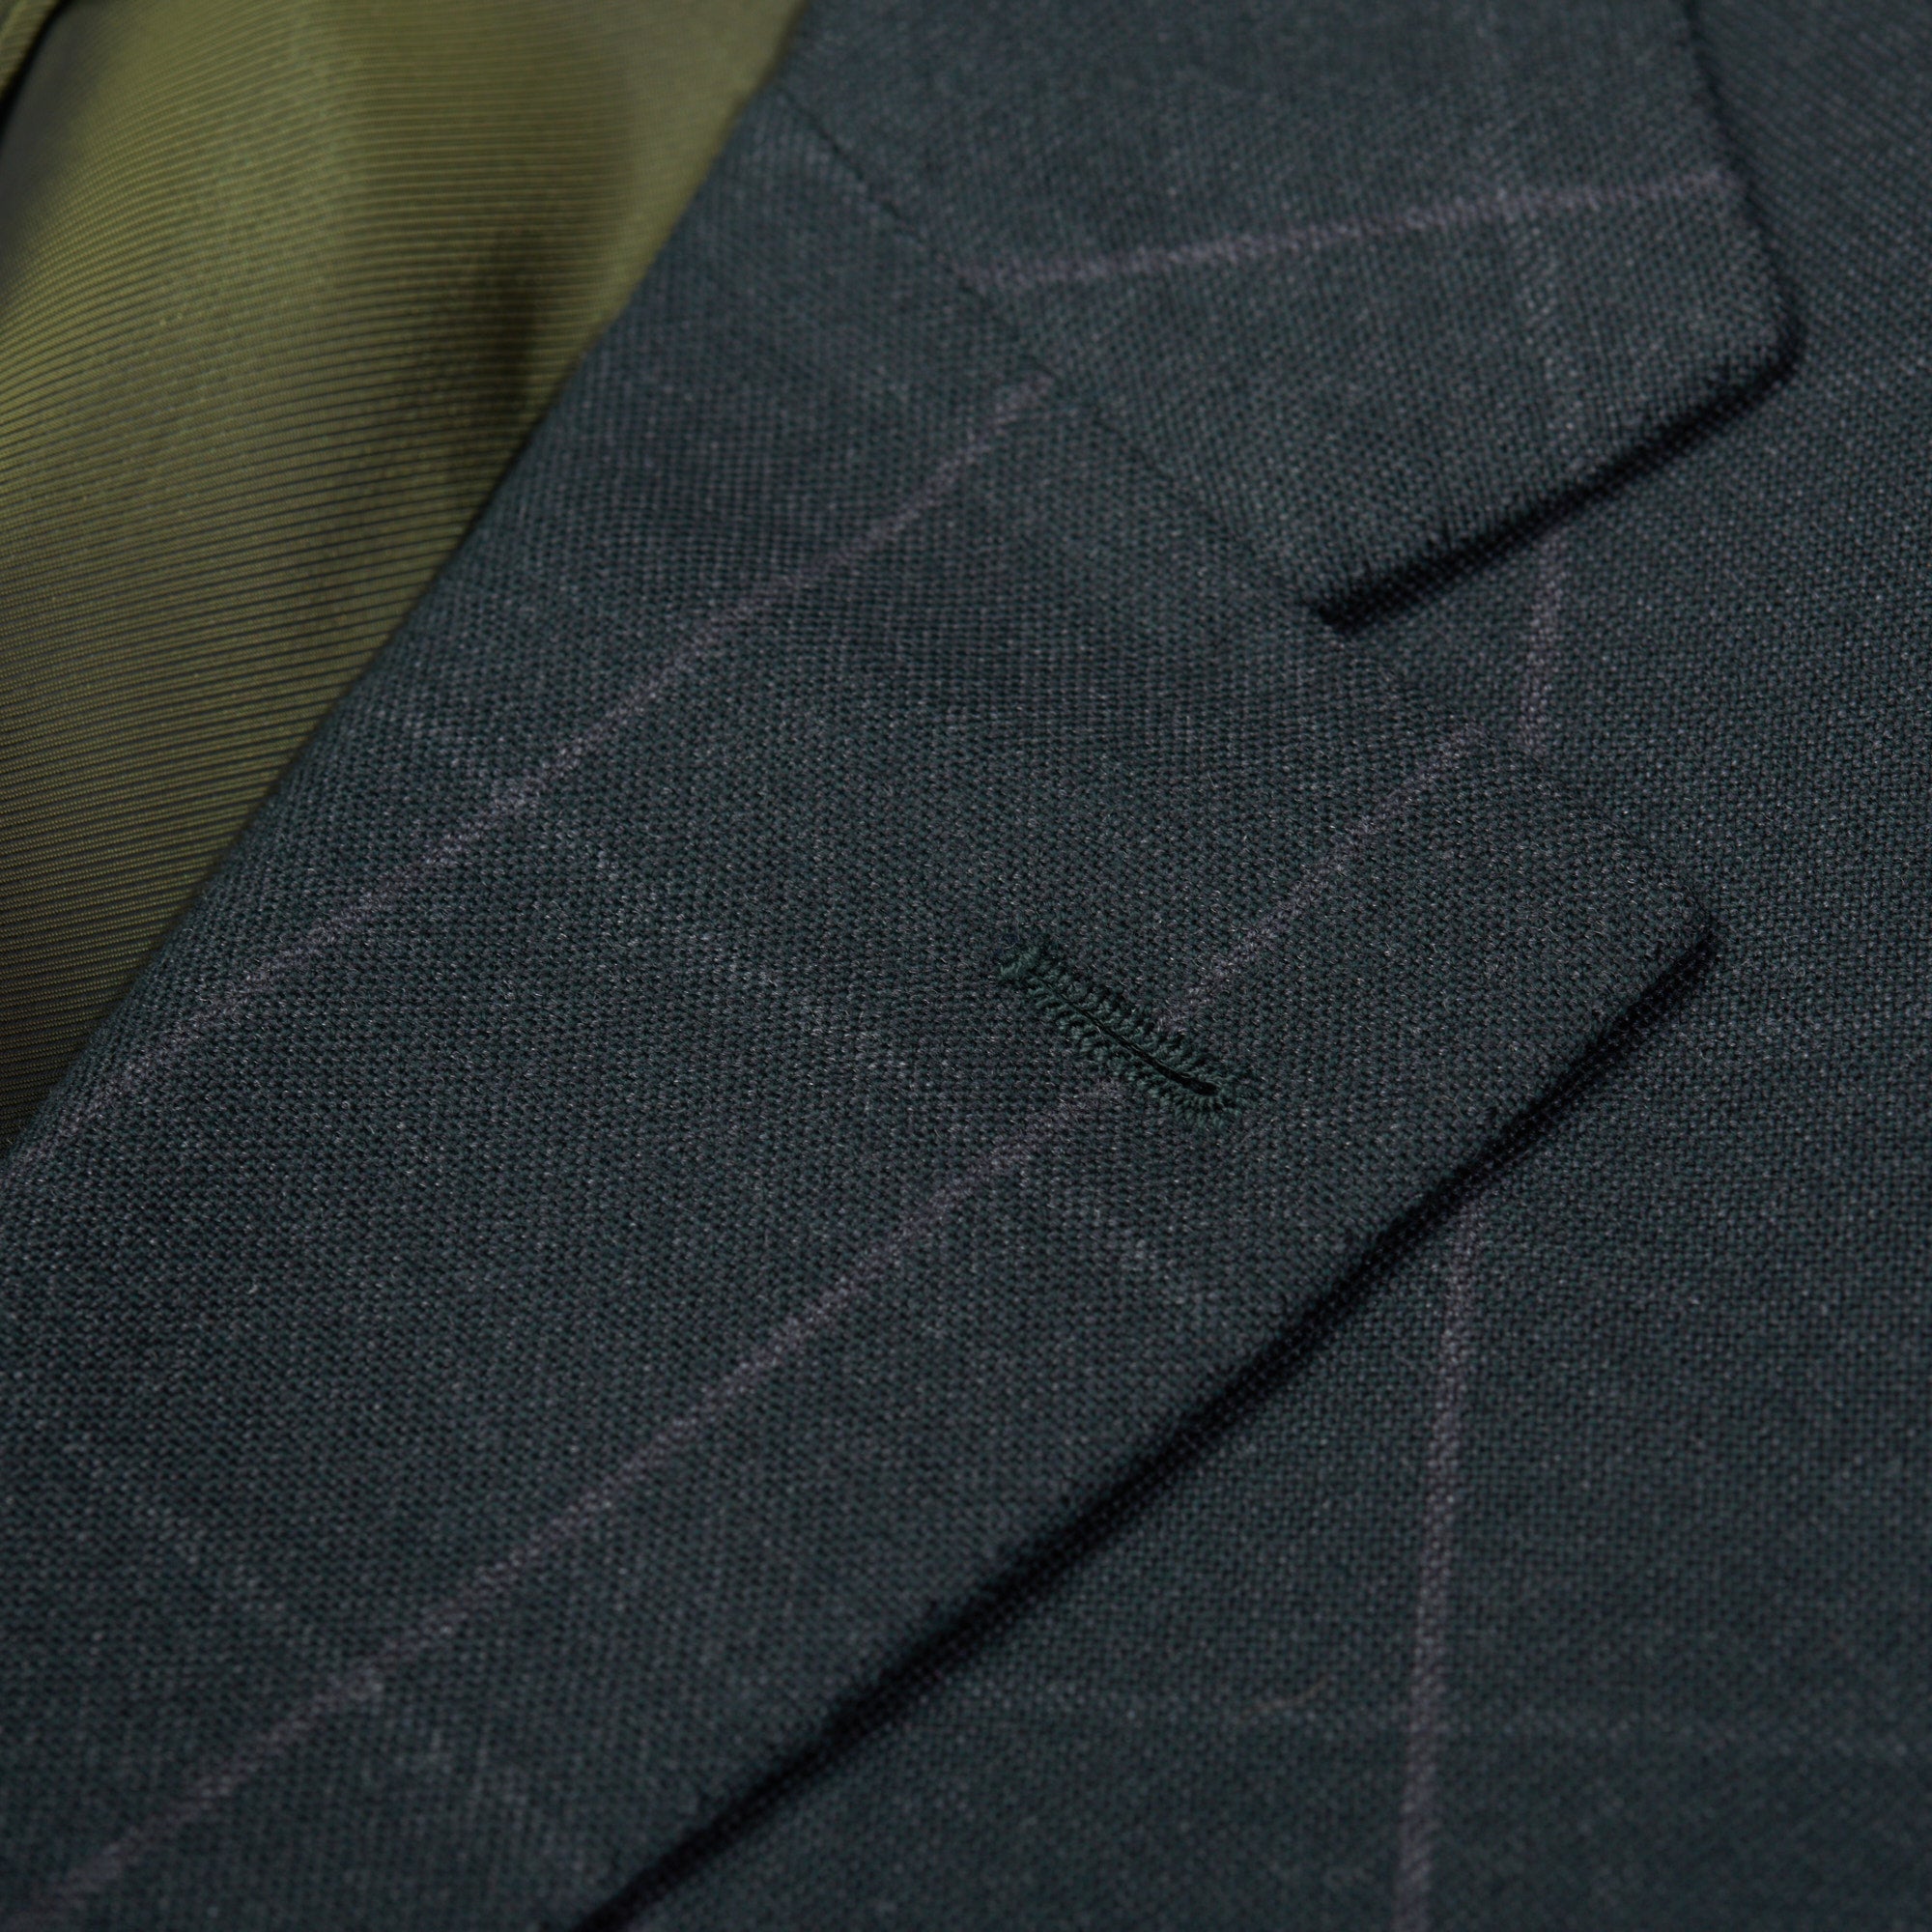 CESARE ATTOLINI Napoli Handmade Dark Green Plaid Wool Suit NEW CESARE ATTOLINI